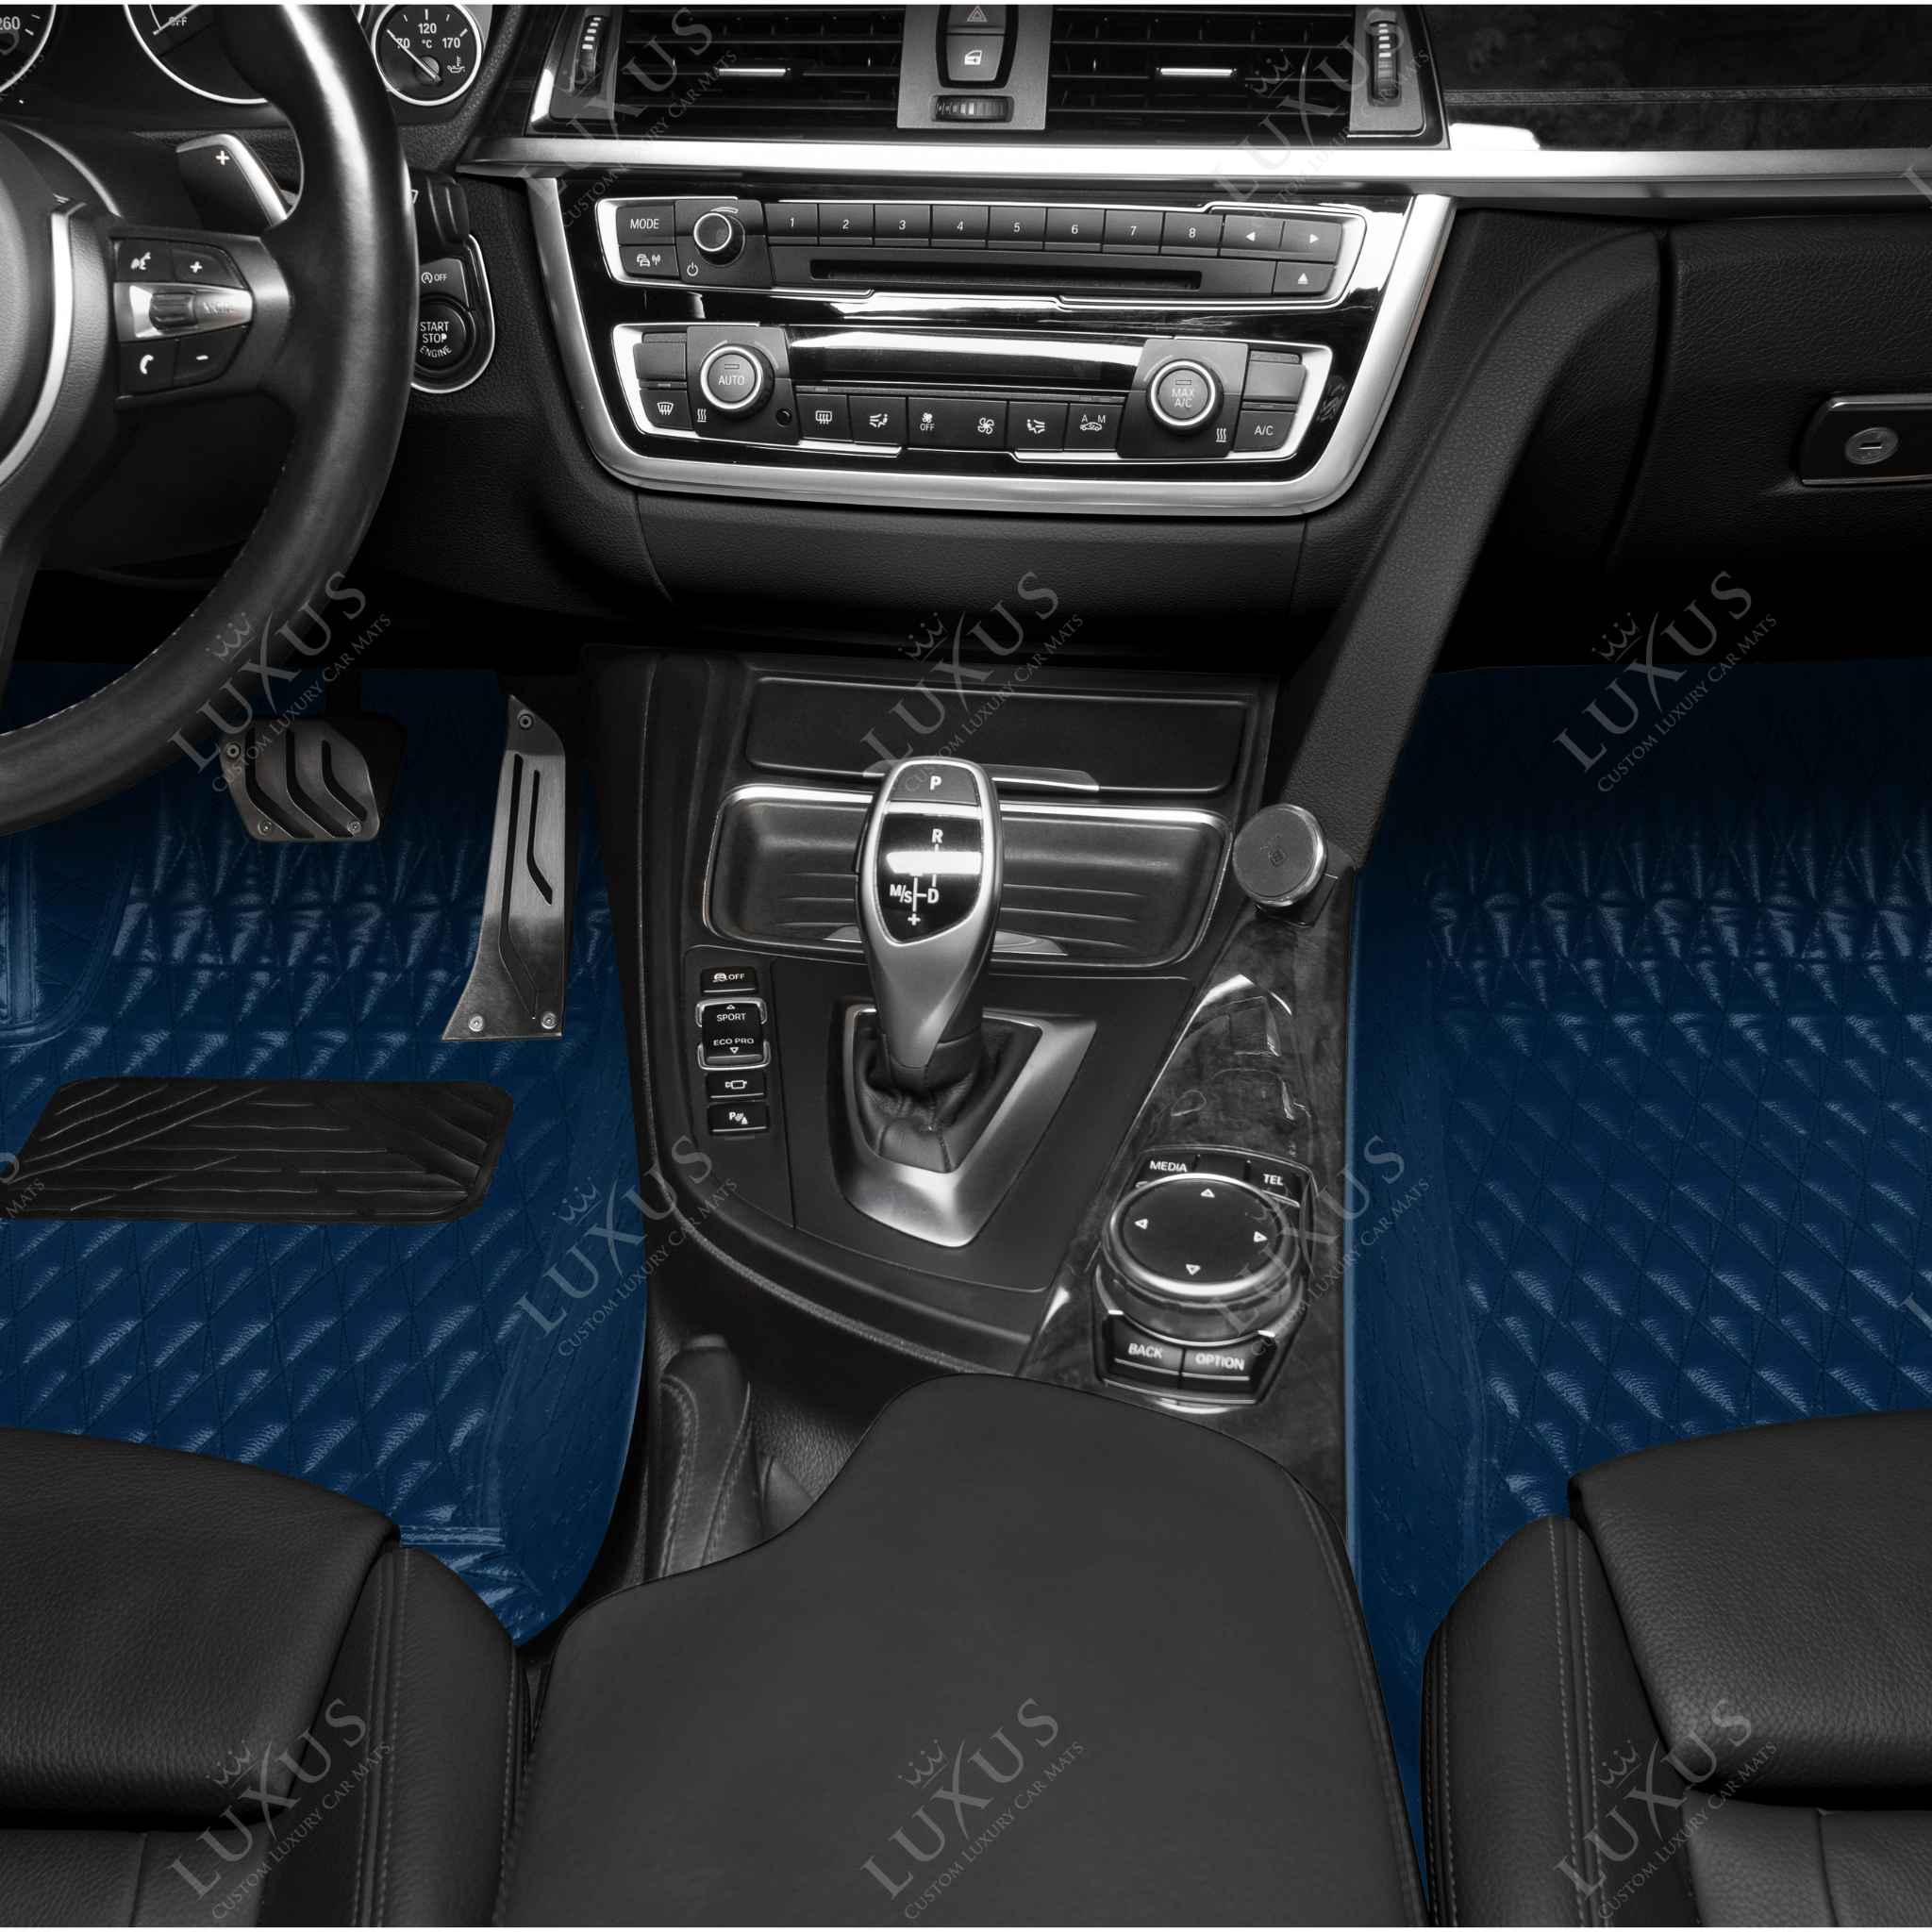 Floor Mats For Car, Truck & SUV Luxus Car Mats Custom All-Weather  Waterproof Diamond Auto Floor Liner Carpets Rugs Black Stitching